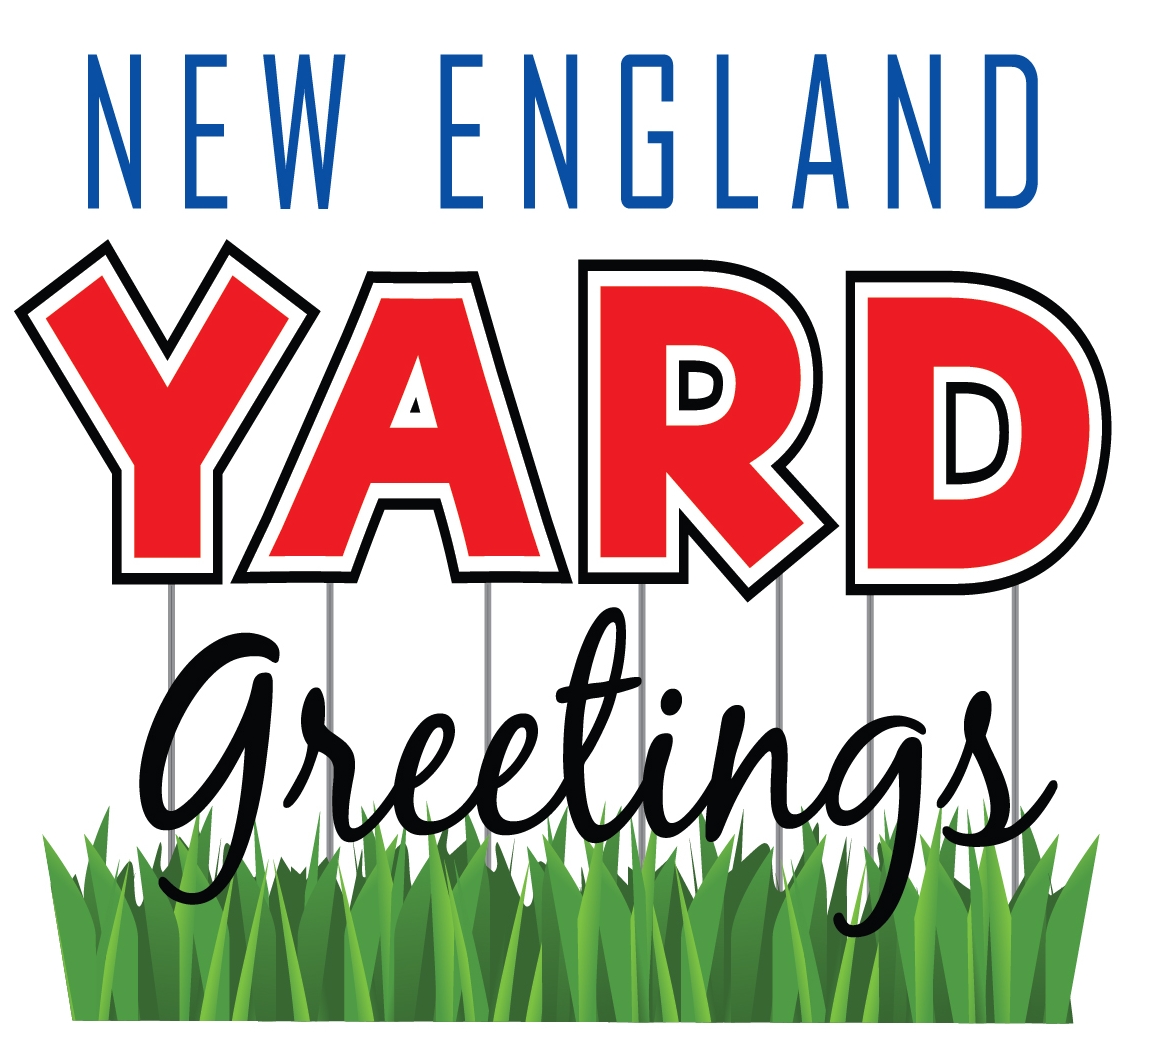 New England Yard Greetings